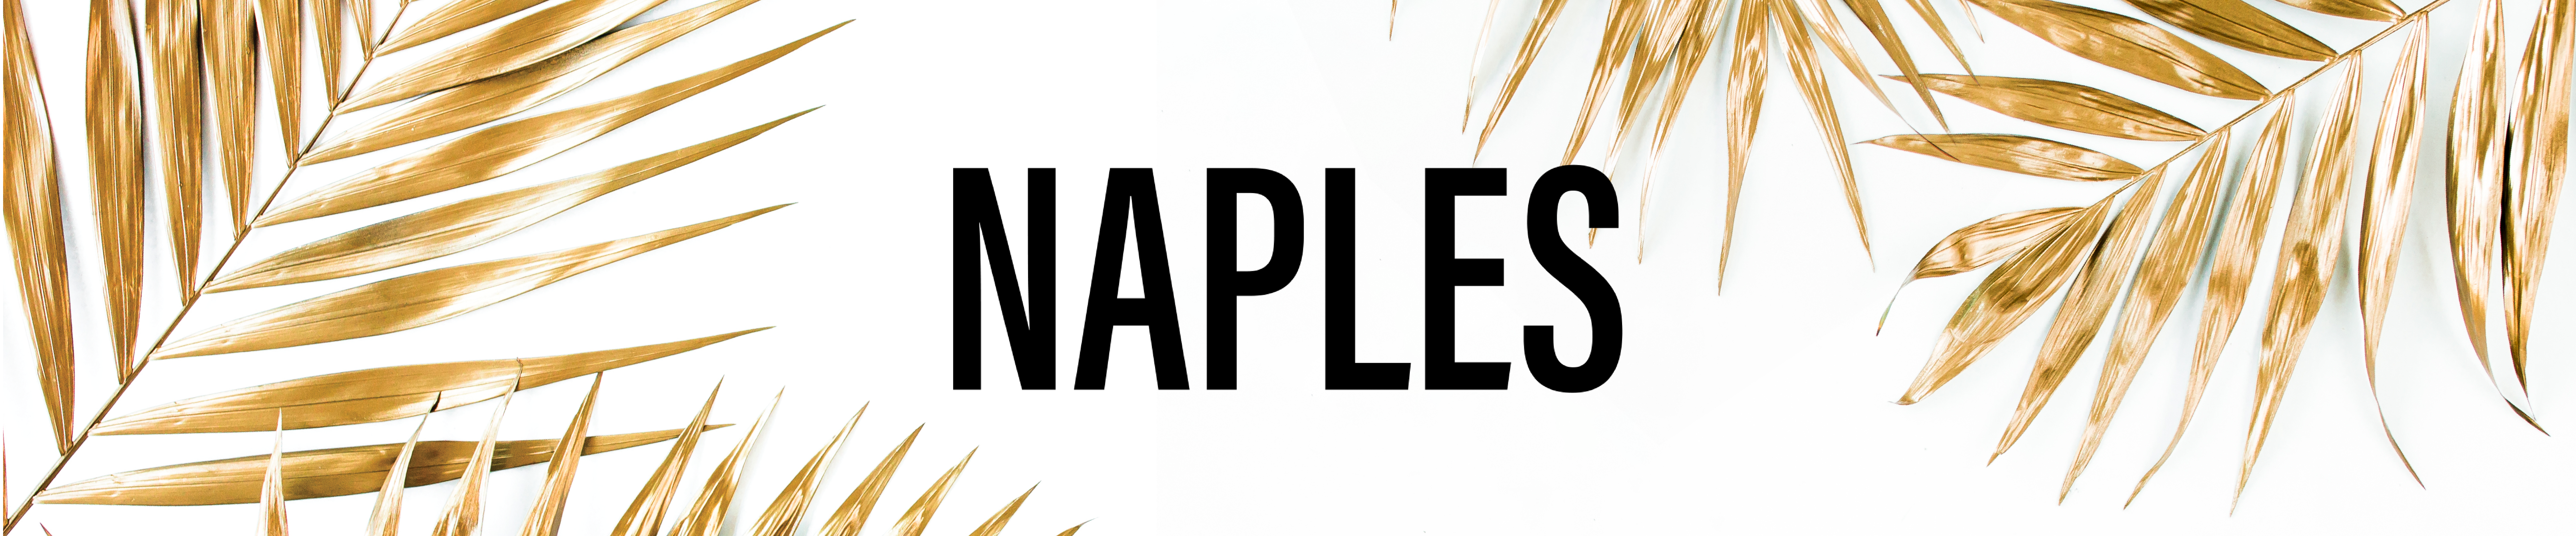 Naples Event Banner